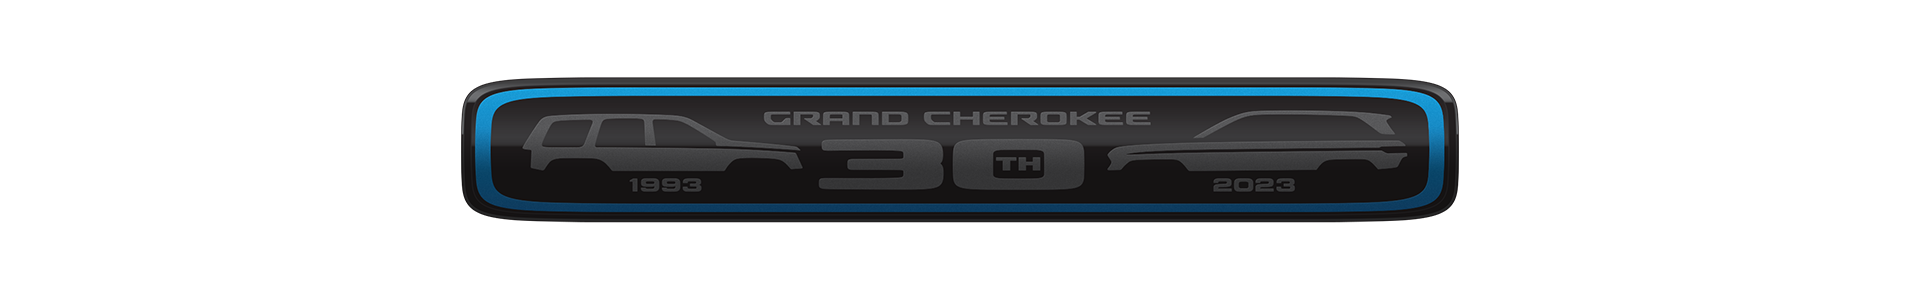 Grand Cherokee 30th. 1993. 2023.